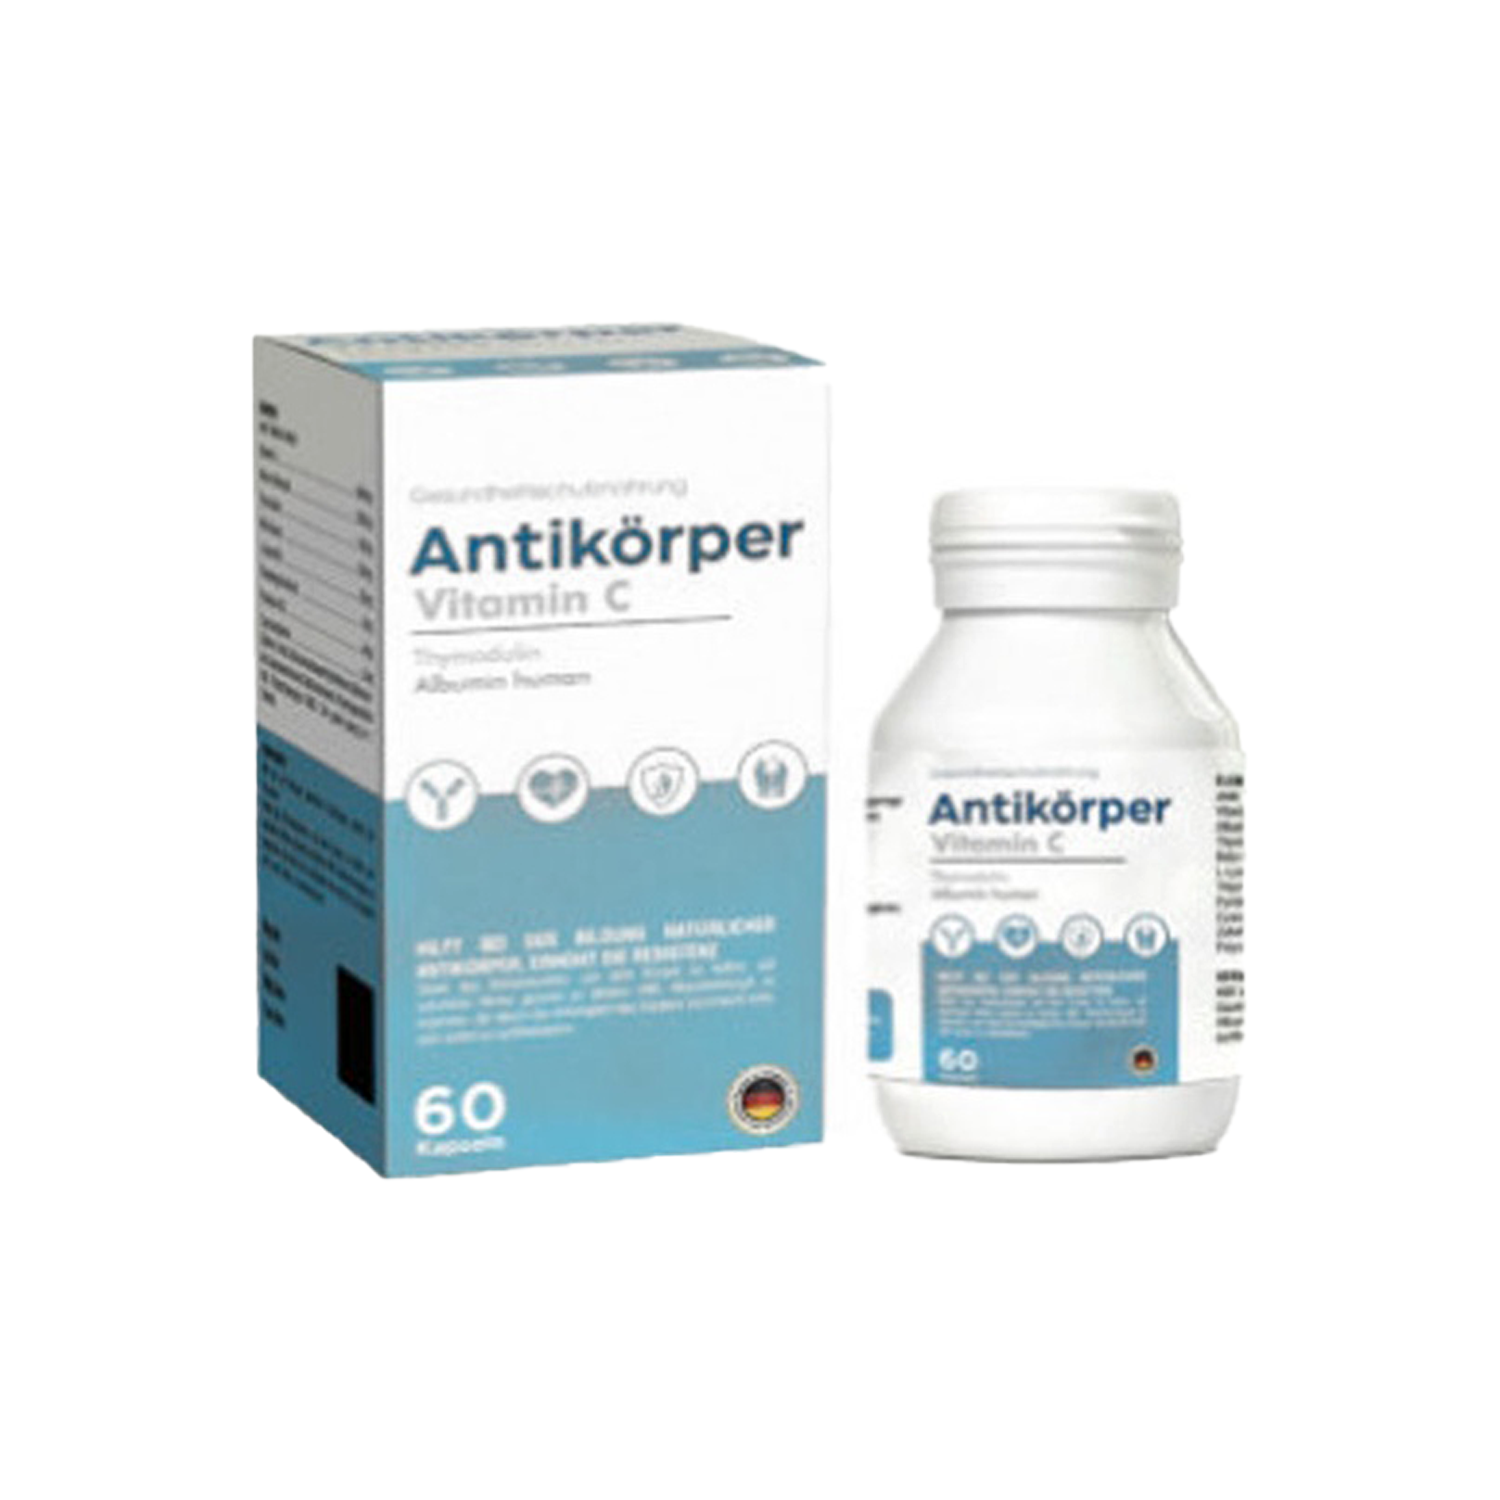 Vitamin C Antikorper (Hộp 30 viên)